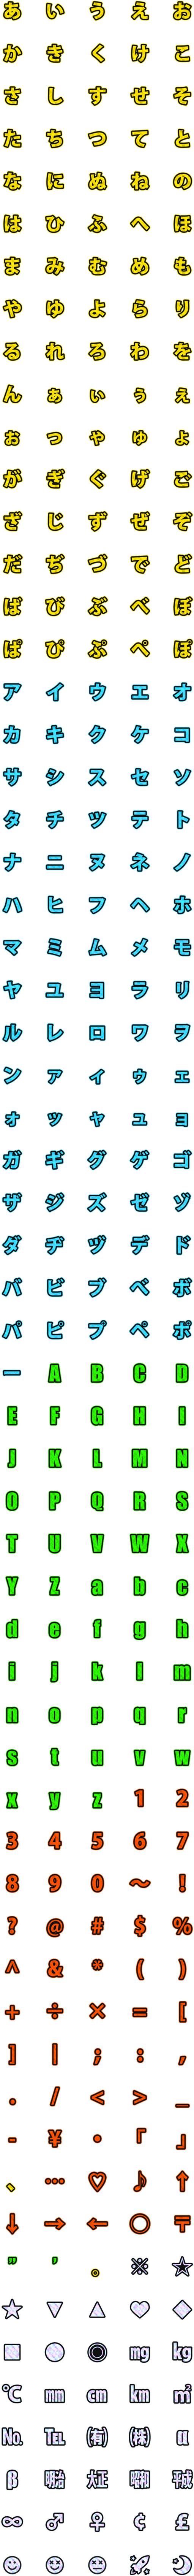 Colorful Sparkle Emoji Pattern PNG